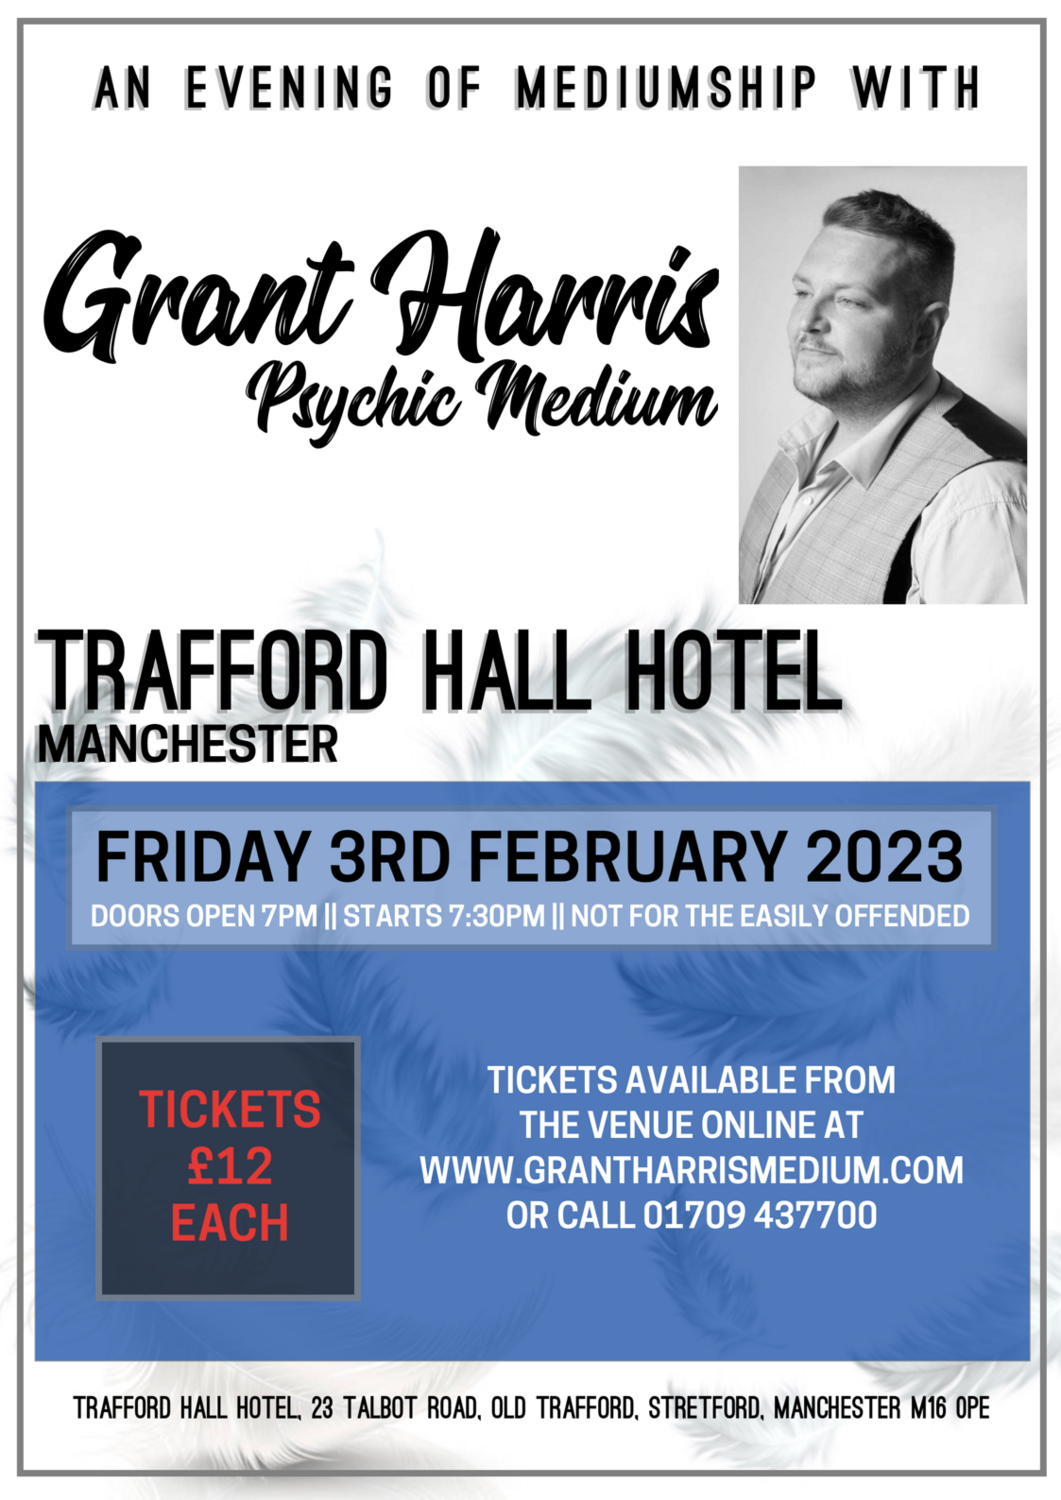 Trafford Hall Hotel, Manchester, Friday 3rd February 2023